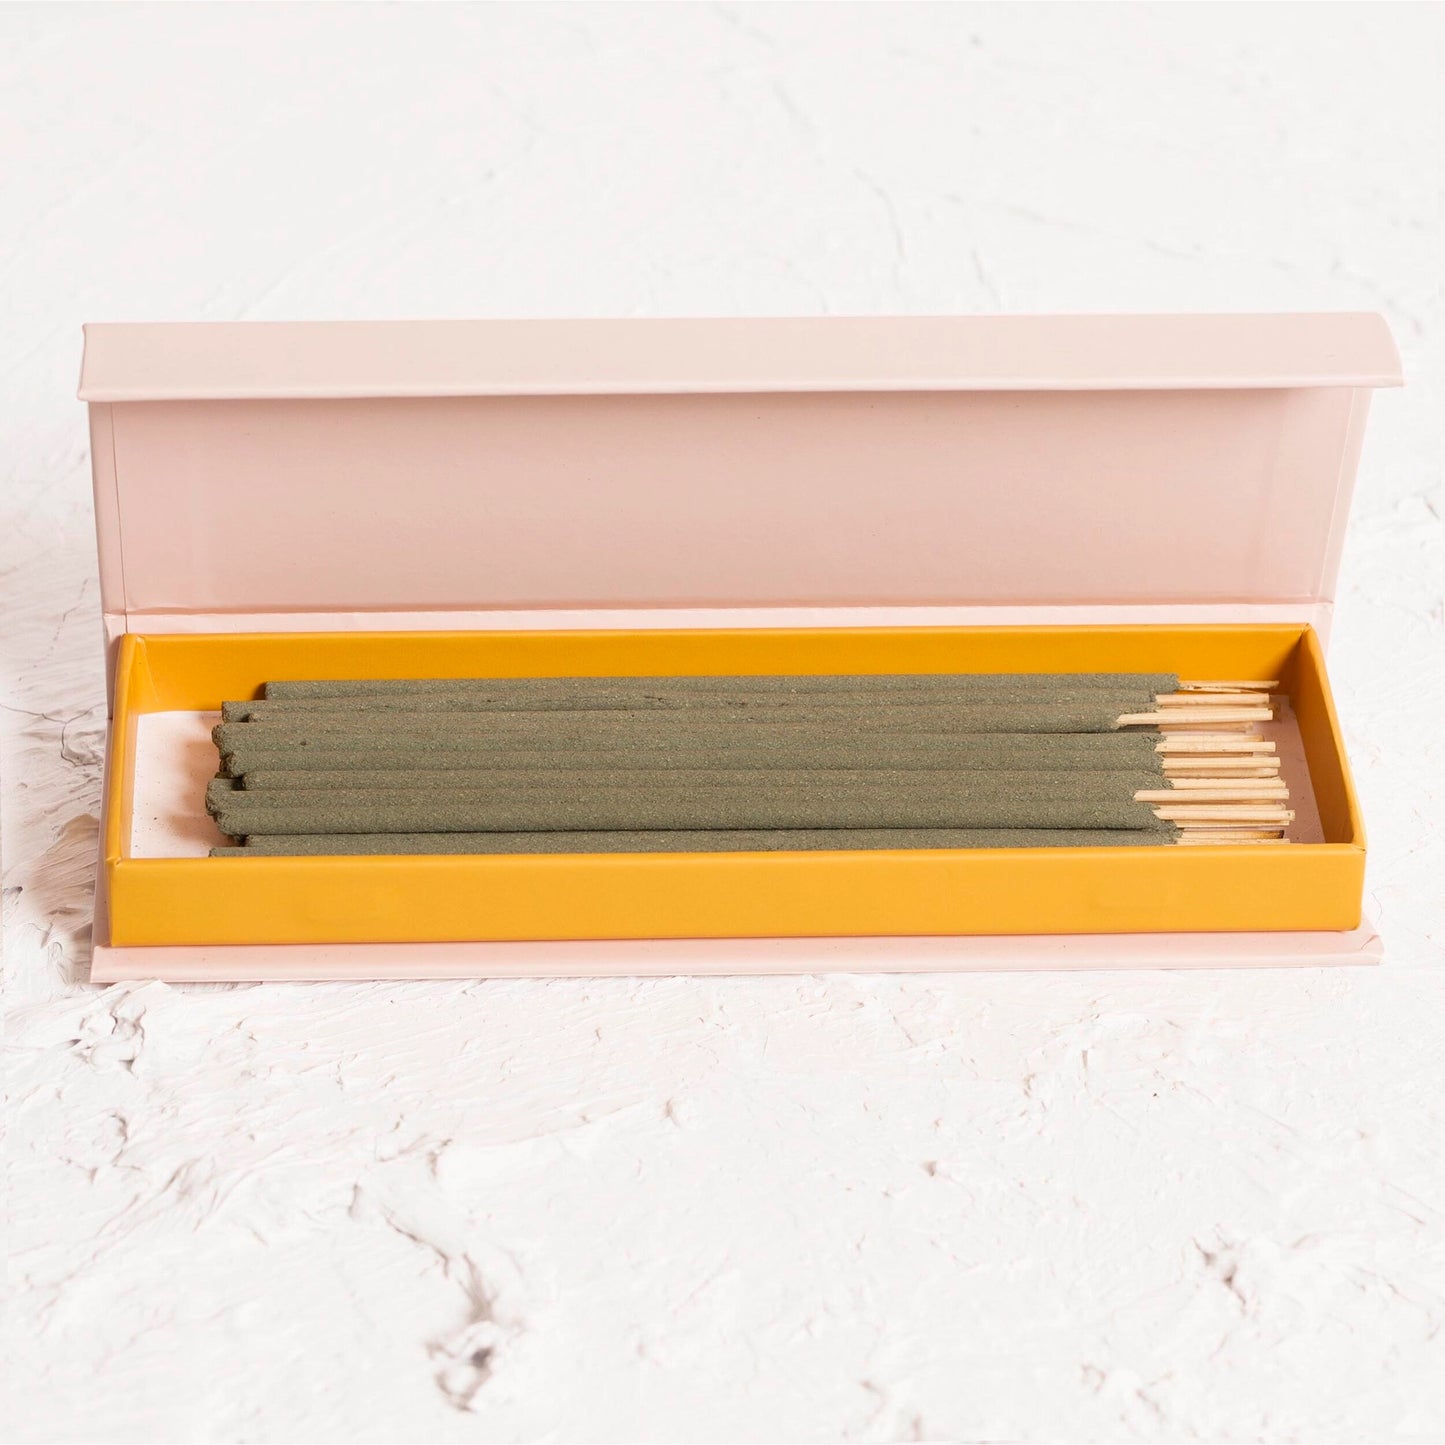 The Golden Altar Natural Incense Box - Frankincense